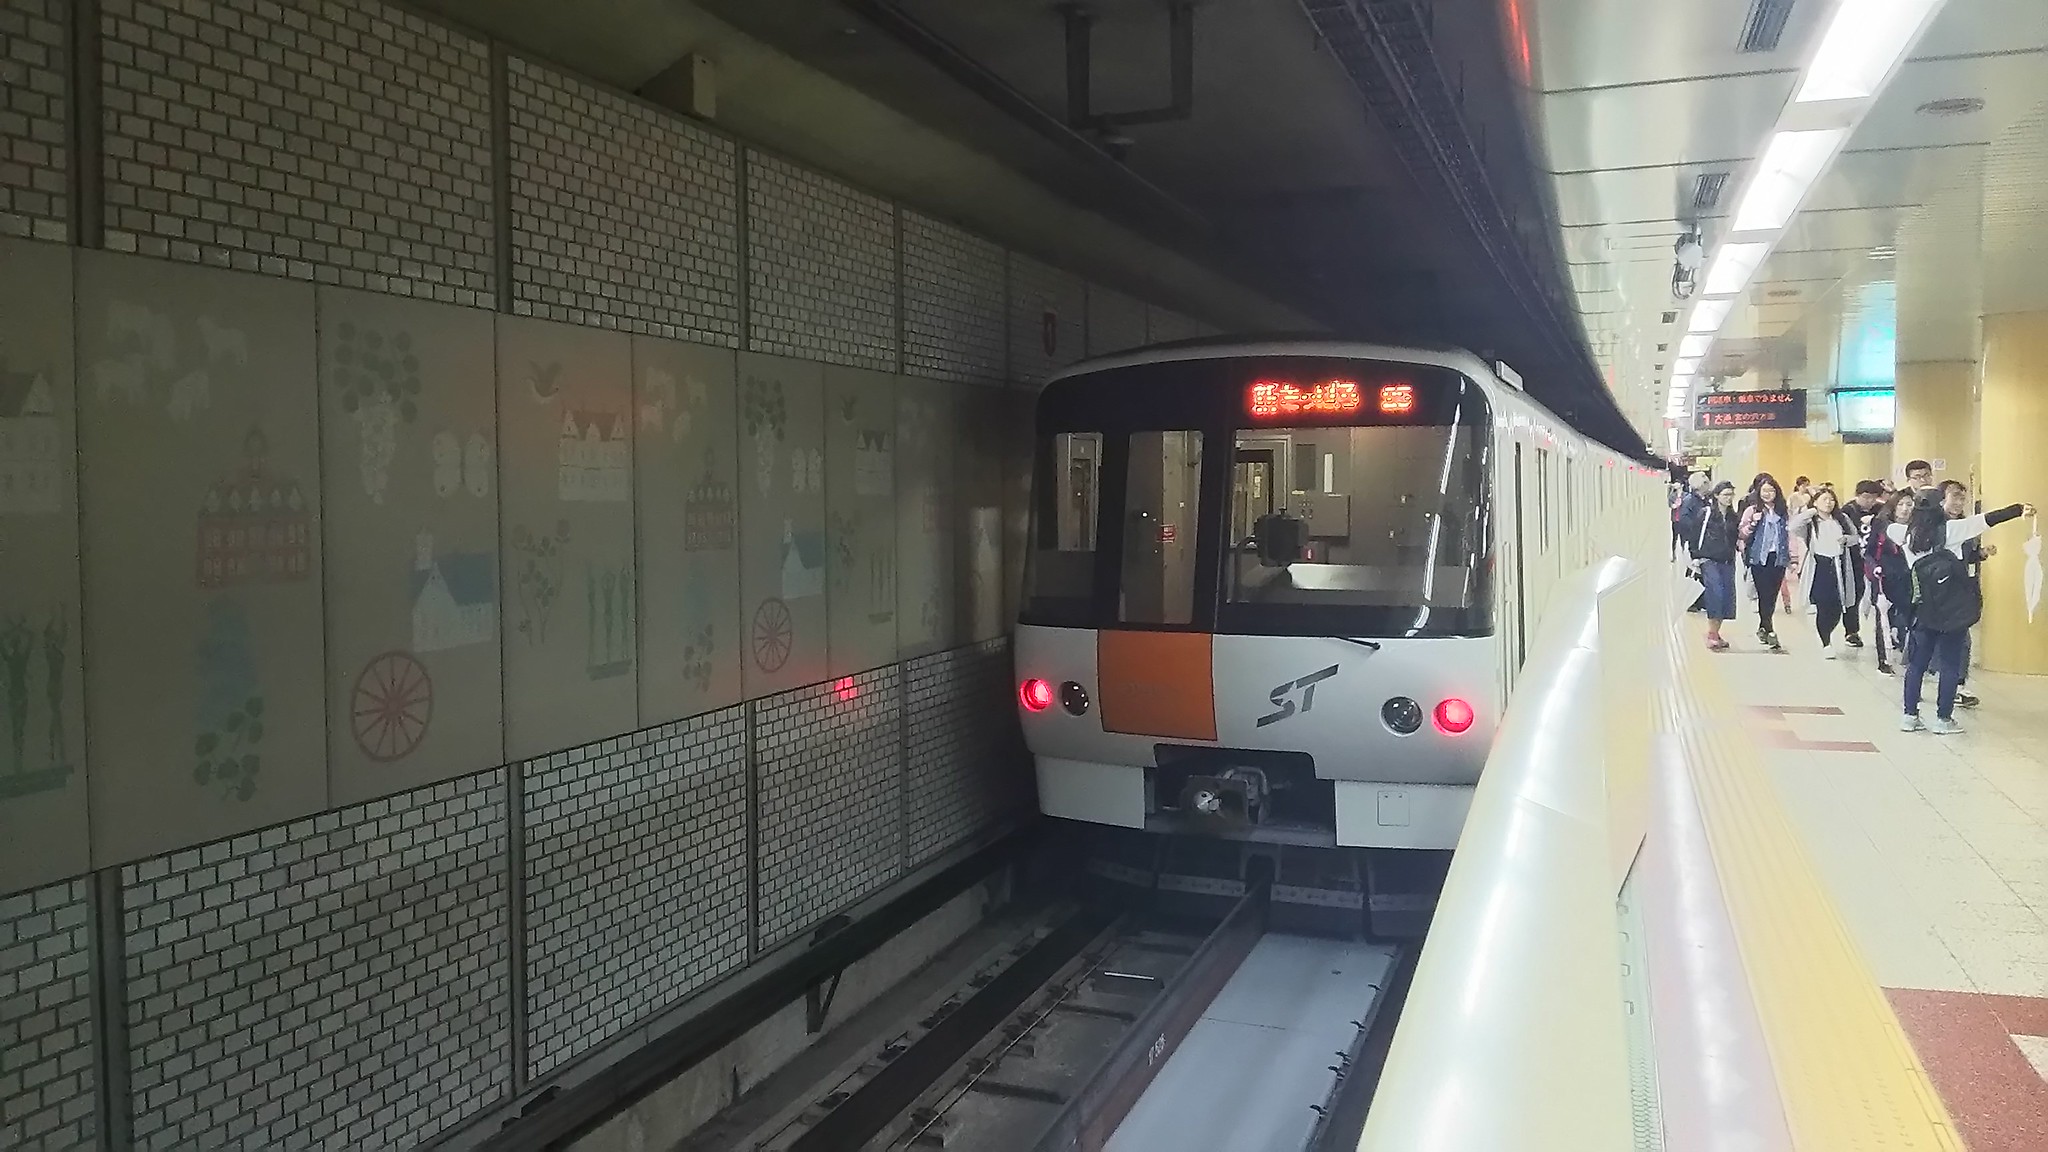 Sapporo Municipal Subway 8000series in Shin-Sapporo station, Sapporo, Hokkaido, Japan/ May 4, 2016